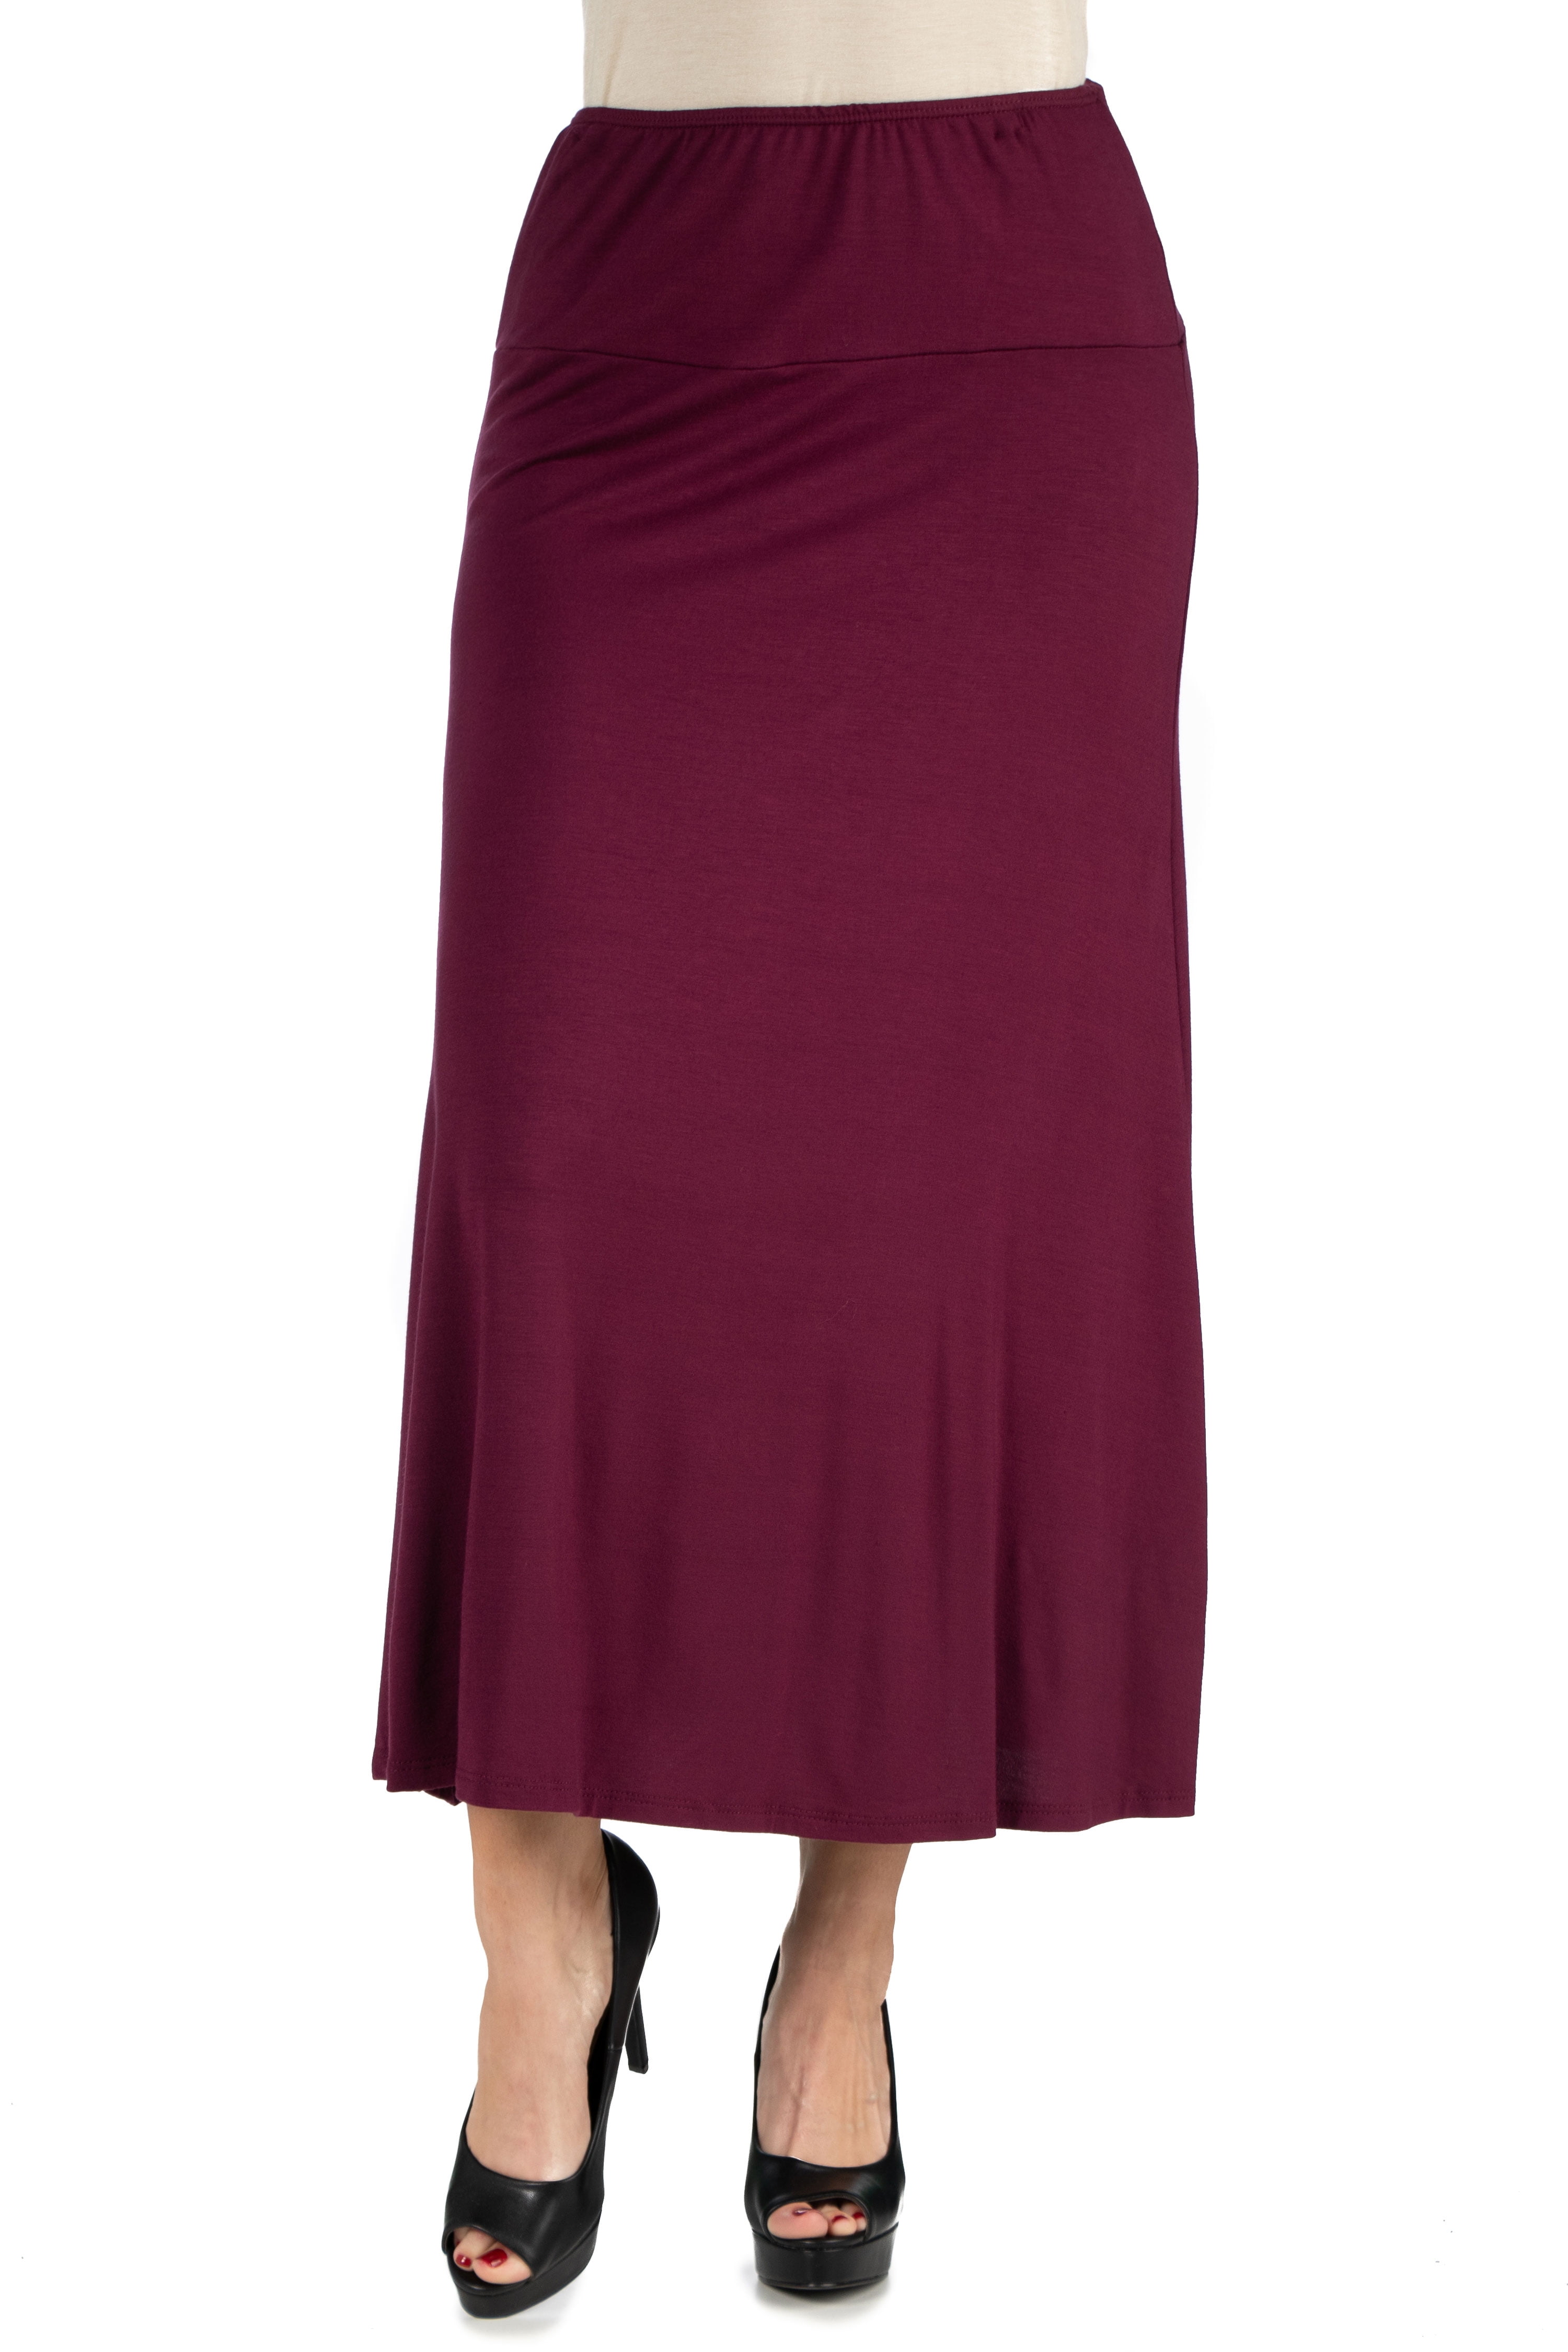 24/7 Comfort Apparel Women's Elastic Waist Solid Color Maxi Skirt ...